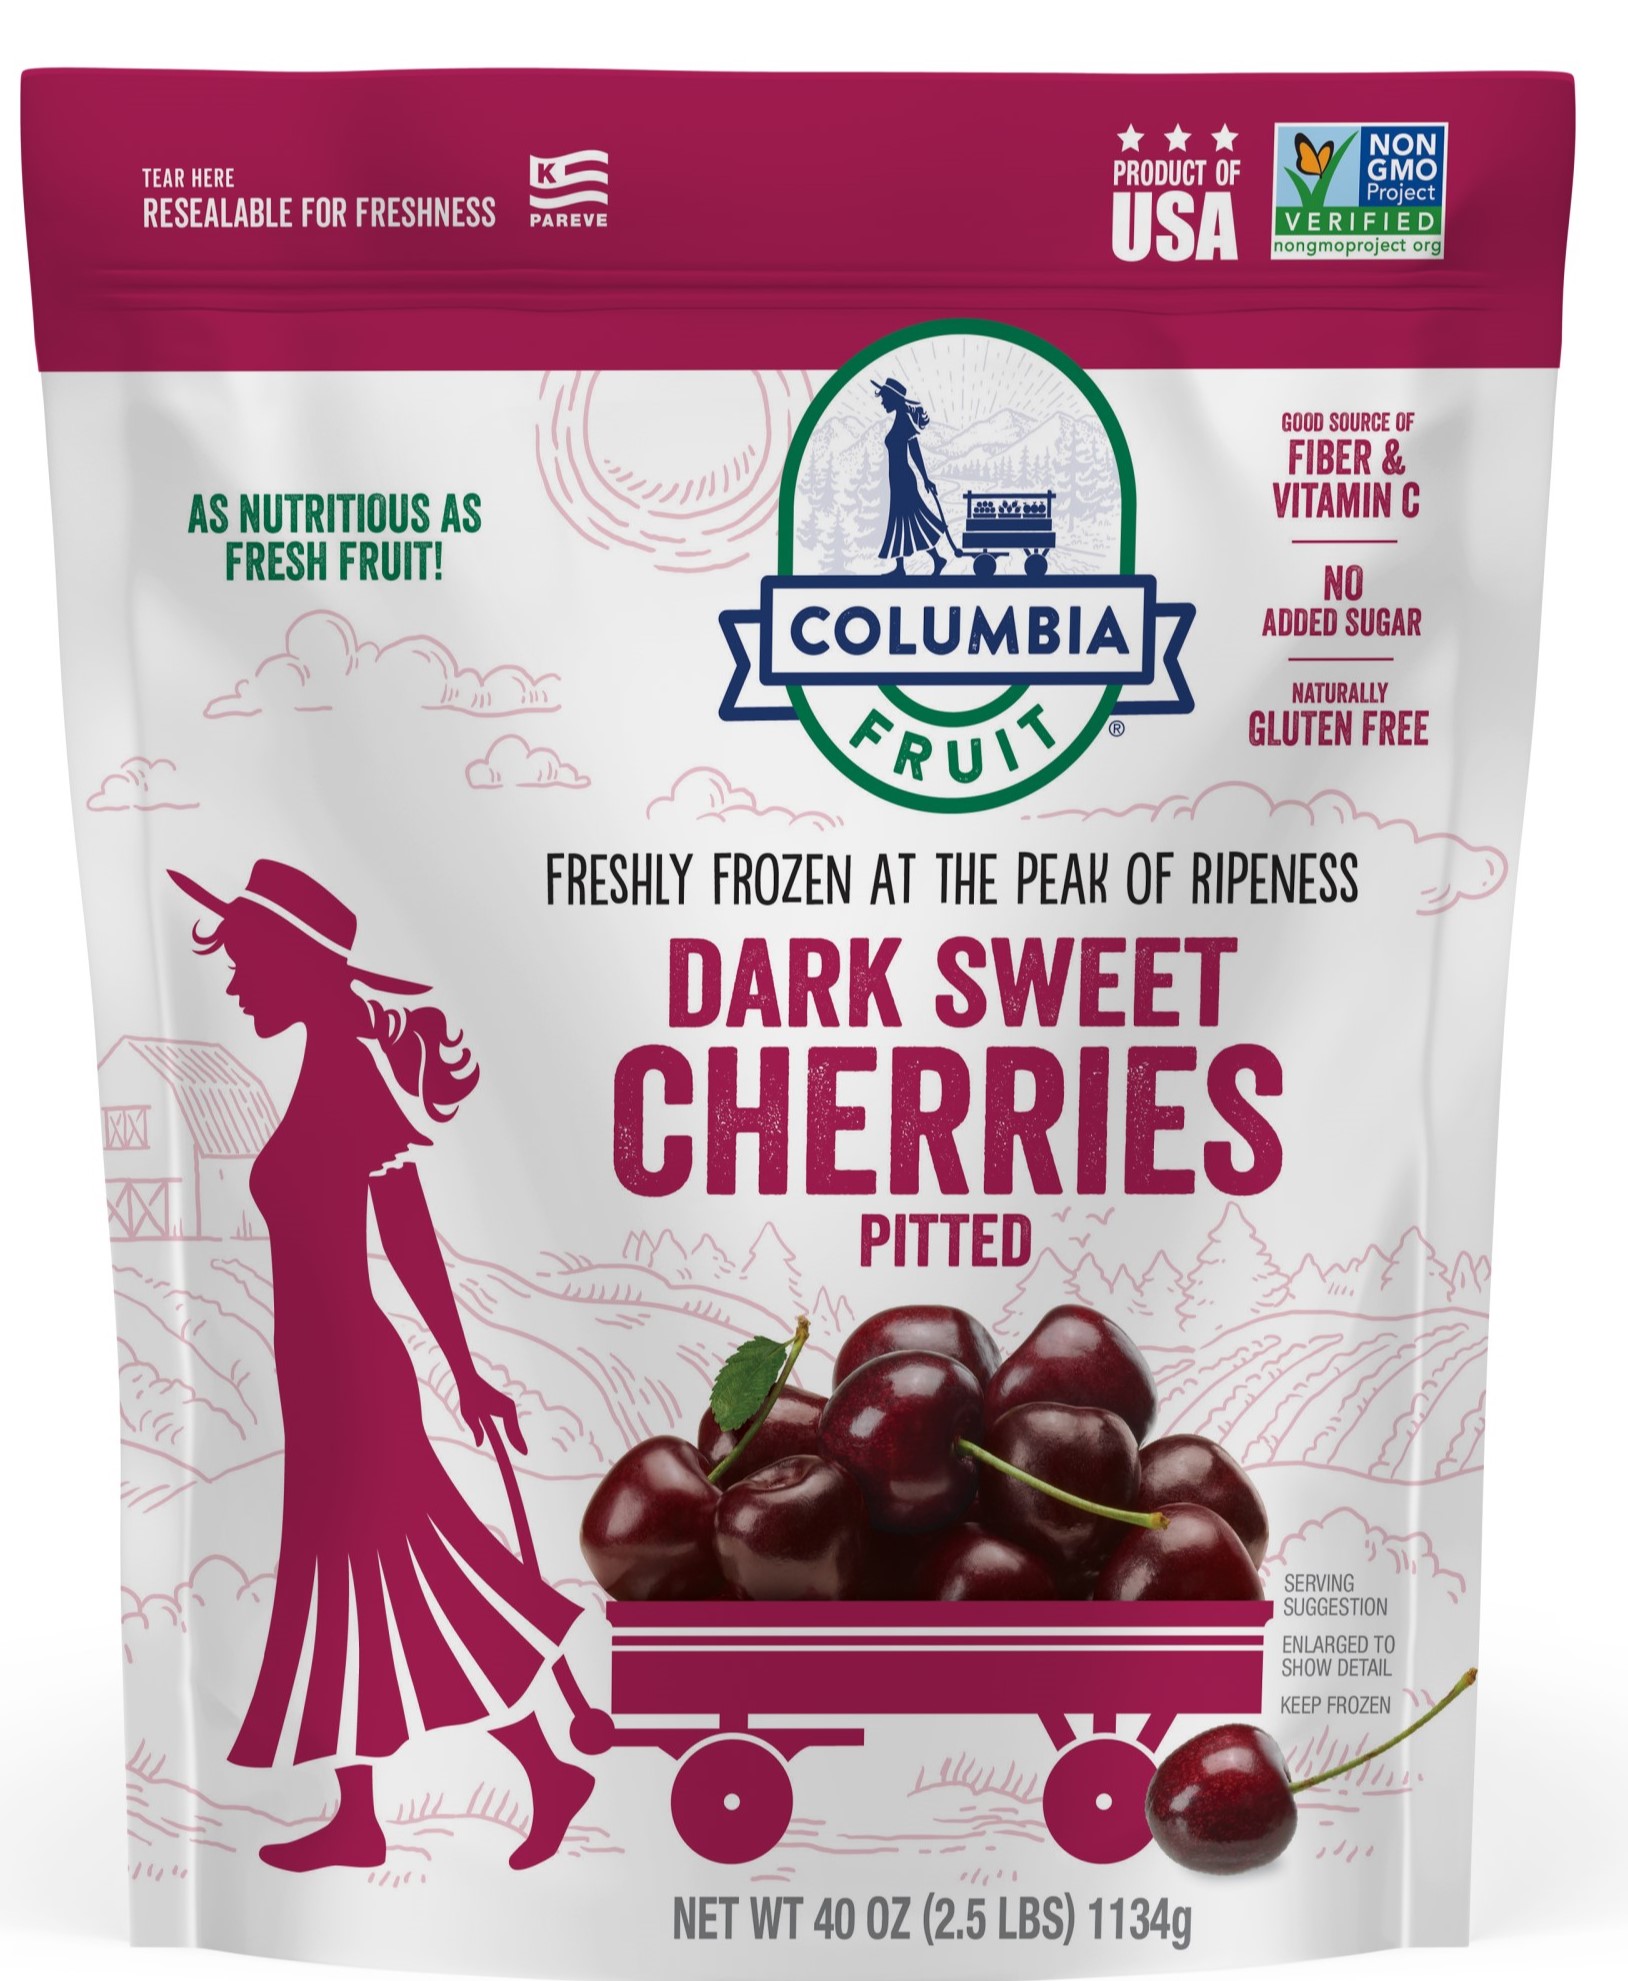 Dark Sweet Cherries - Columbia Fruit